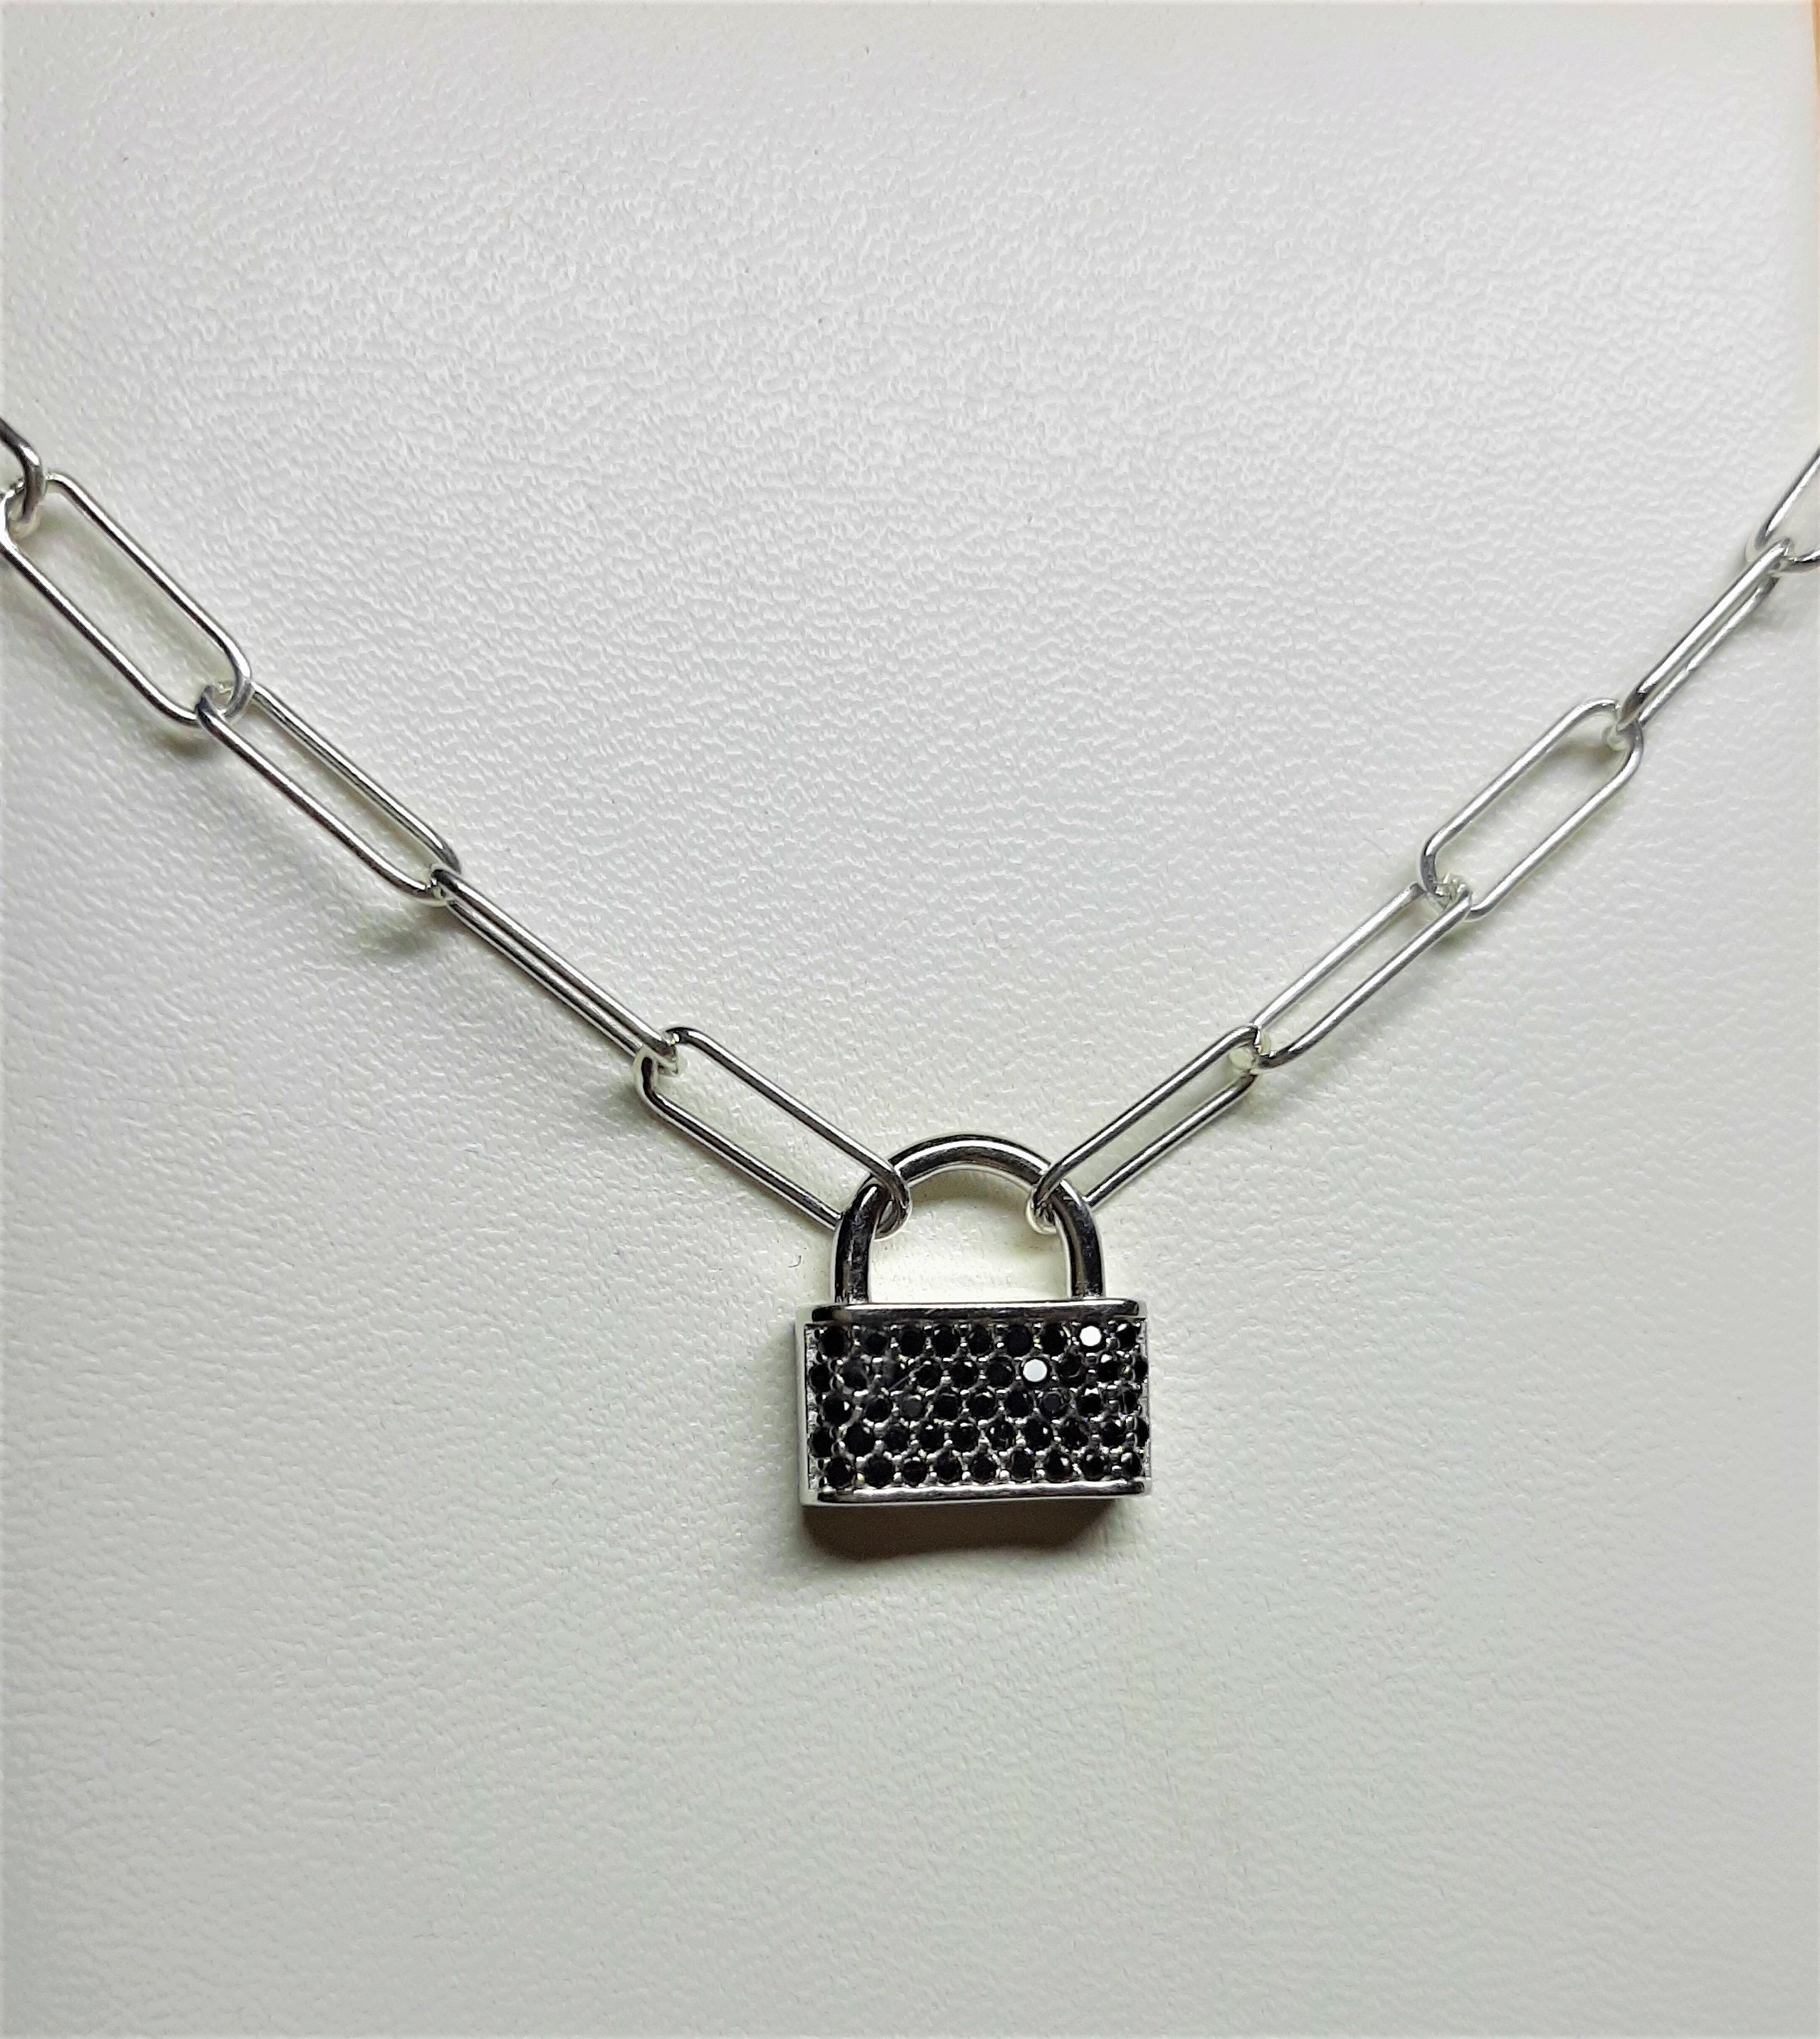 Padlock Necklace Lock Pendant Lock Charm Necklace for Women 